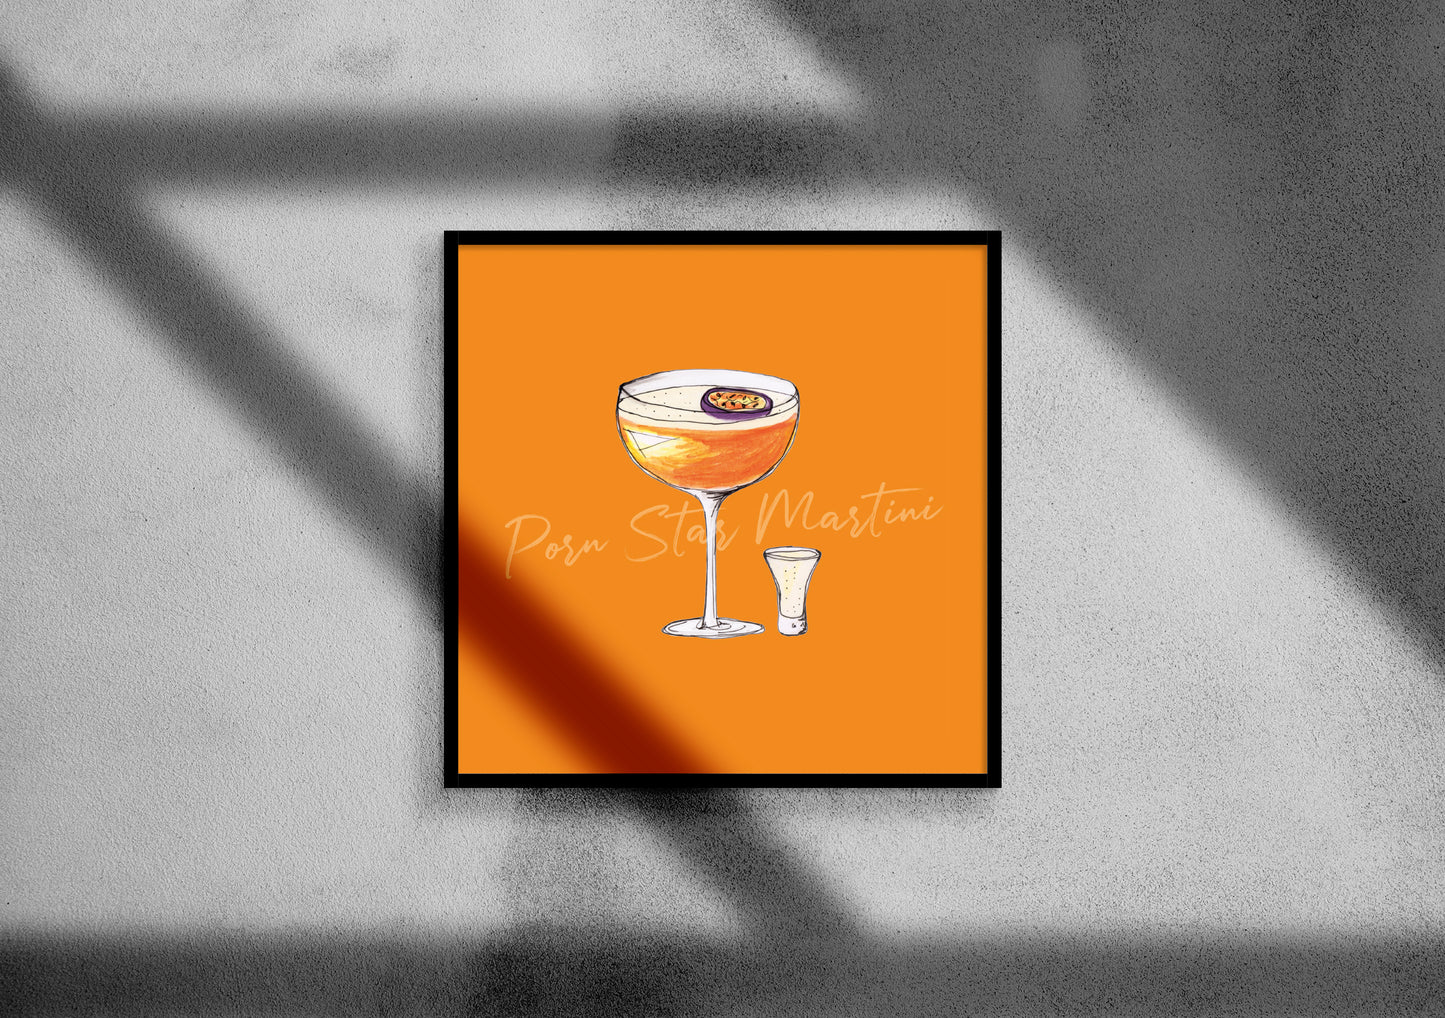 Porn Star Martini illustration square cocktail print